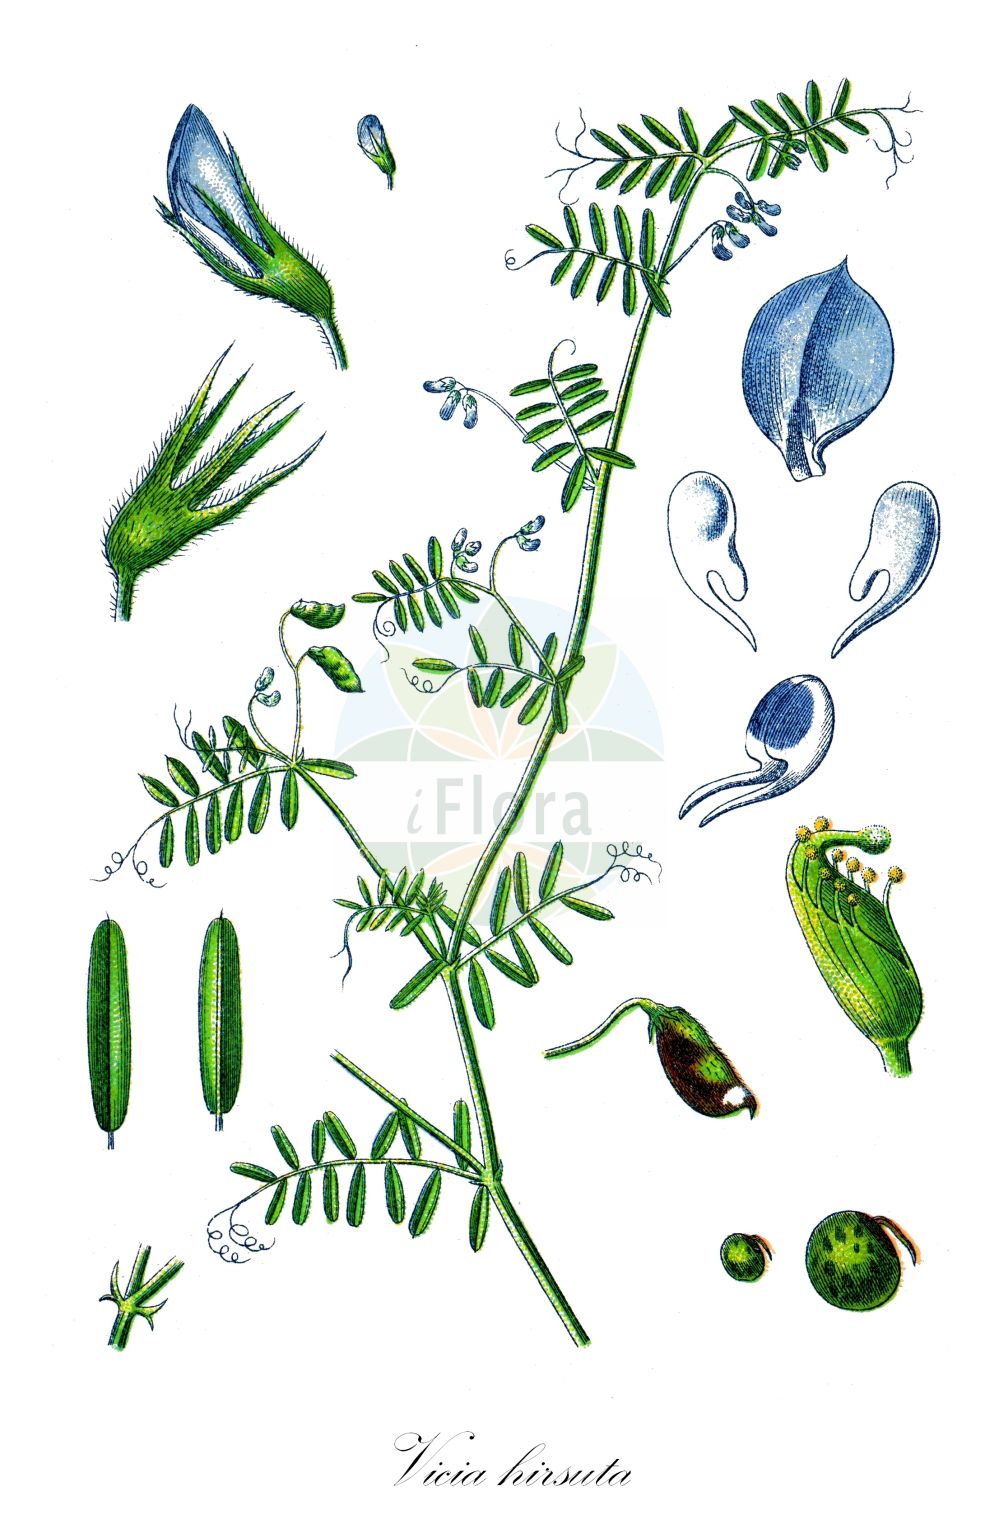 Historische Abbildung von Vicia hirsuta (Behaarte Wicke - Hairy Tare). Das Bild zeigt Blatt, Bluete, Frucht und Same. ---- Historical Drawing of Vicia hirsuta (Behaarte Wicke - Hairy Tare). The image is showing leaf, flower, fruit and seed.(Vicia hirsuta,Behaarte Wicke,Hairy Tare,Cracca hirsuta,Cracca minor,Endiusa hirsuta,Ervilia hirsuta,Ervilia vulgaris,Ervum filiforme,Ervum hirsutum,Vicia coreana,Vicia hirsuta,Vicia mitchellii,Vicia parviflora,Vicia taquetii,Vicioides hirsuta,Behaarte Wicke,Zitter-Wicke,Hairy Tare,Common Hairy Tare,Hairy Vetch,Tiny Vetch,Tyne Grass,Vicia,Wicke,Vetch,Fabaceae,Schmetterlingsblütler,Pea family,Blatt,Bluete,Frucht,Same,leaf,flower,fruit,seed,Sturm (1796f))